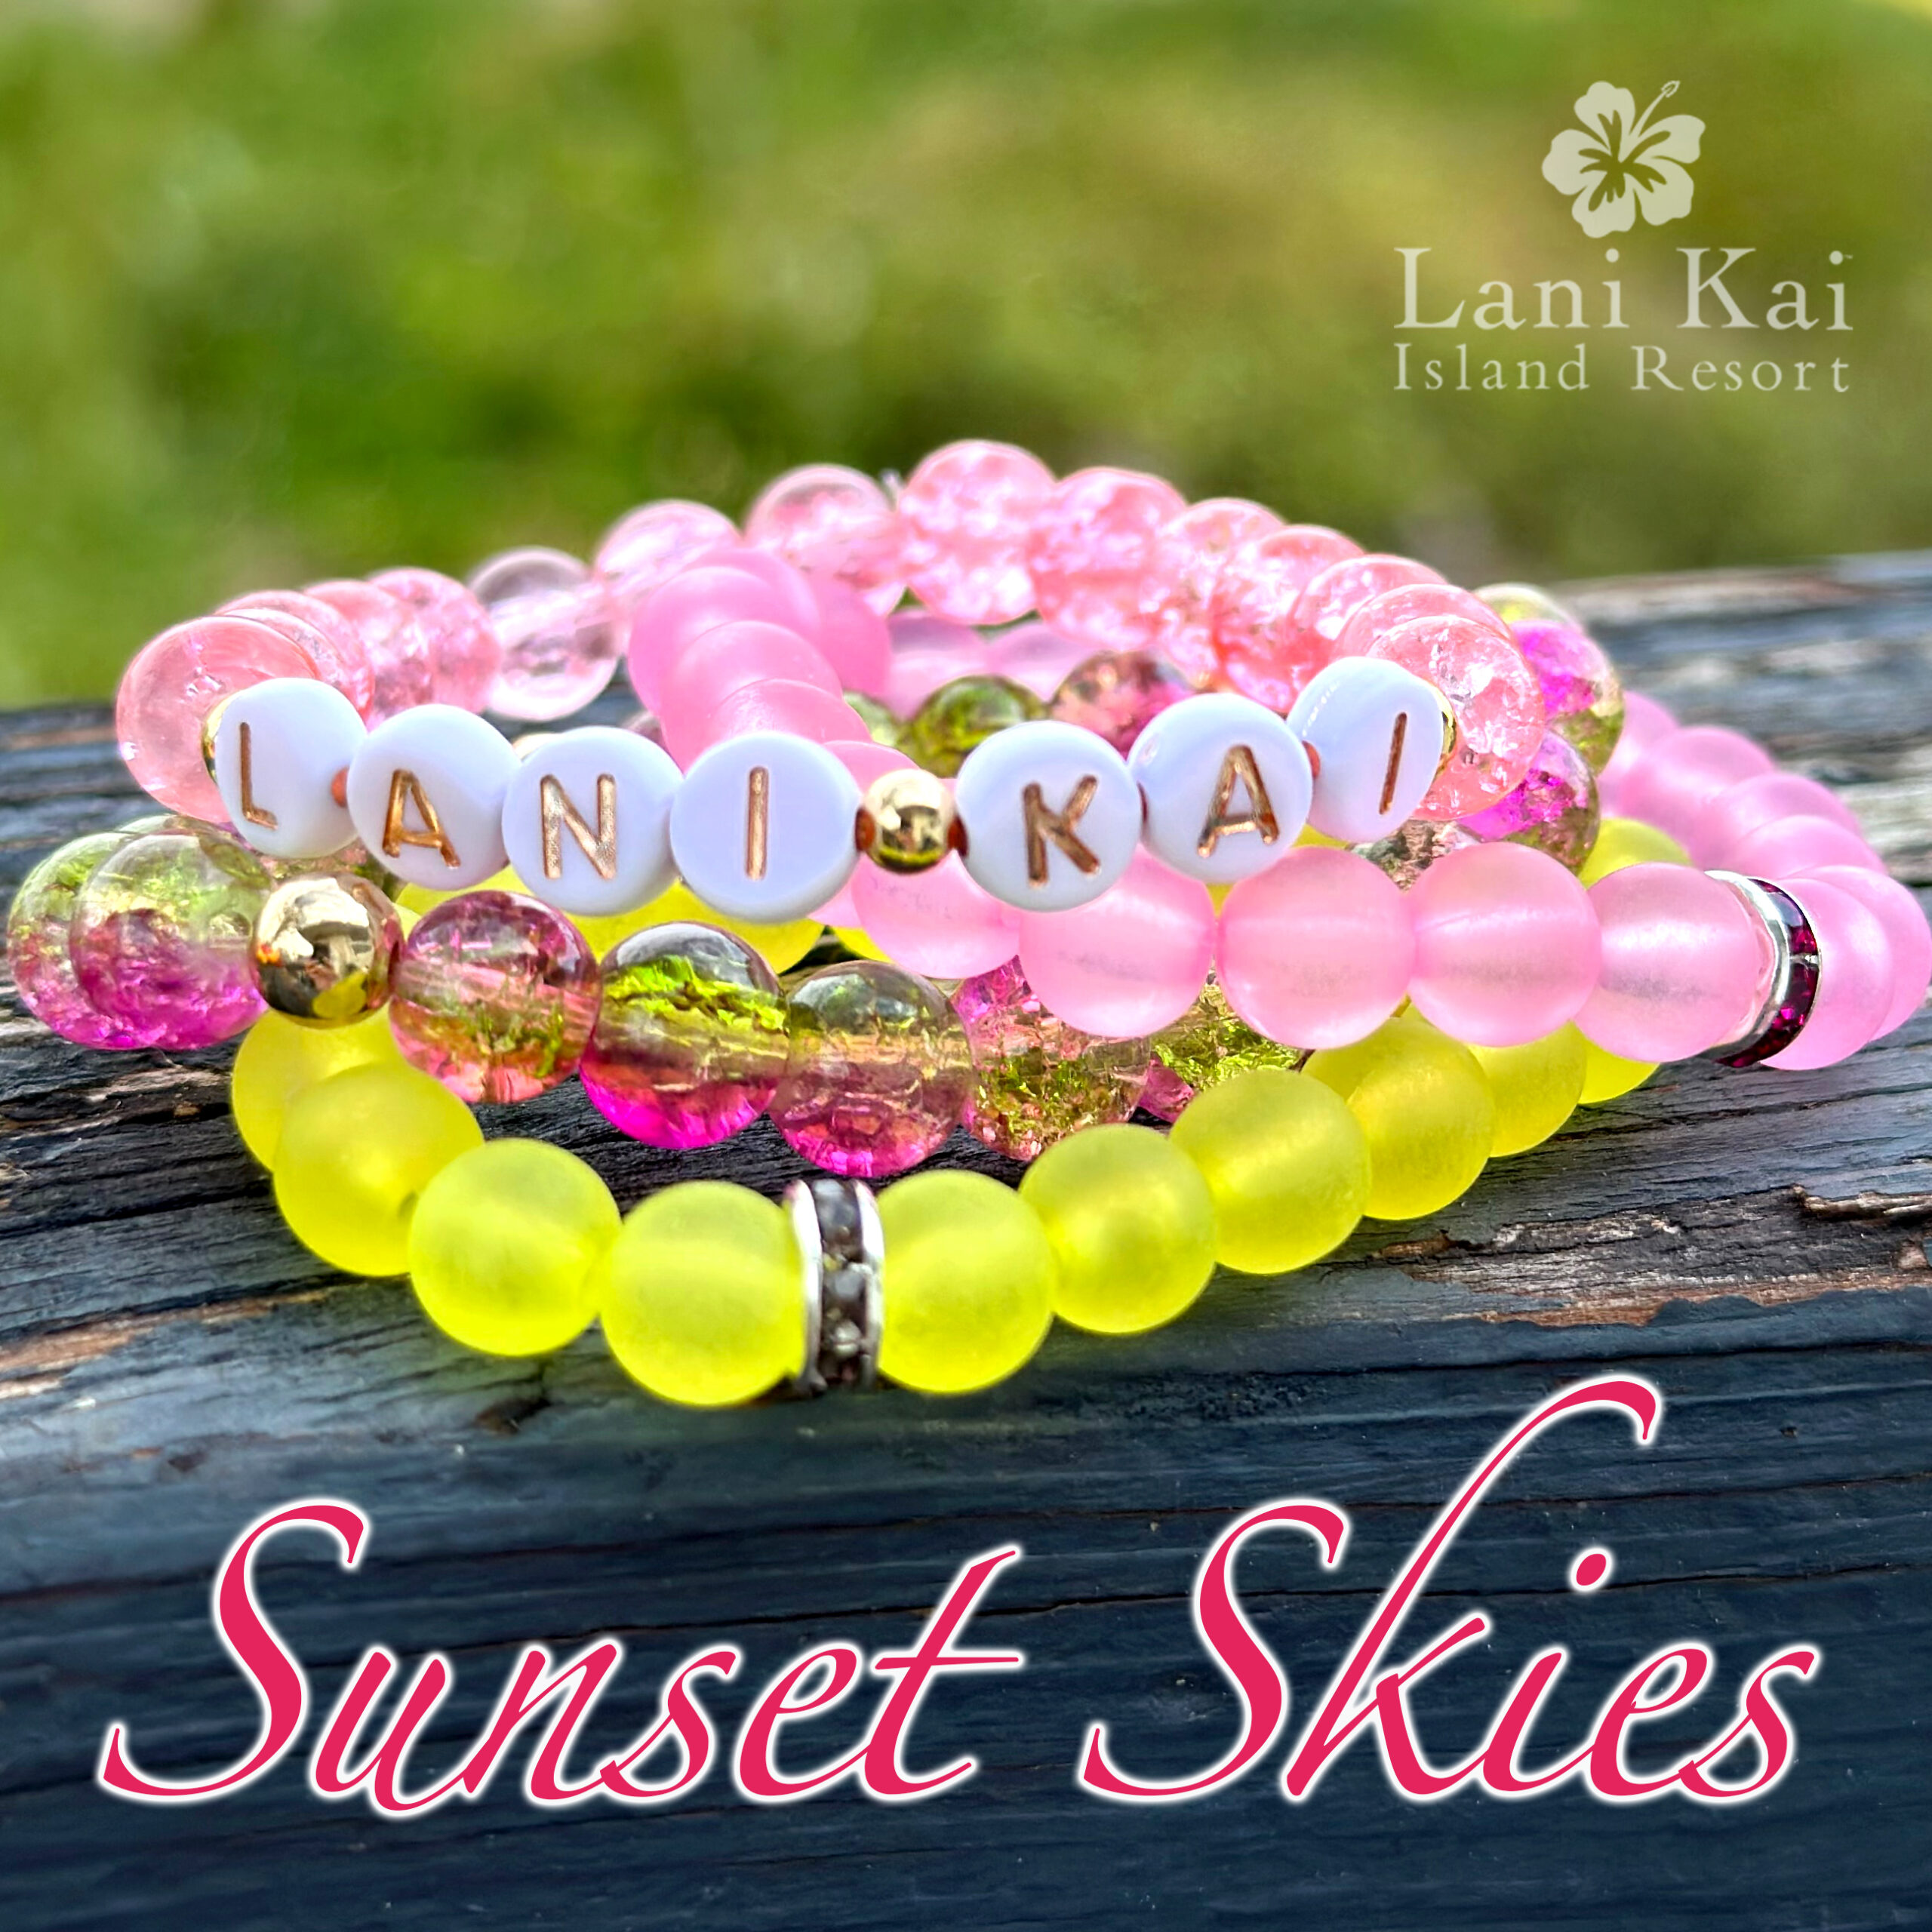 LANI KAI Crystal and Glass Bead Bracelets - Lani Kai Island Resort